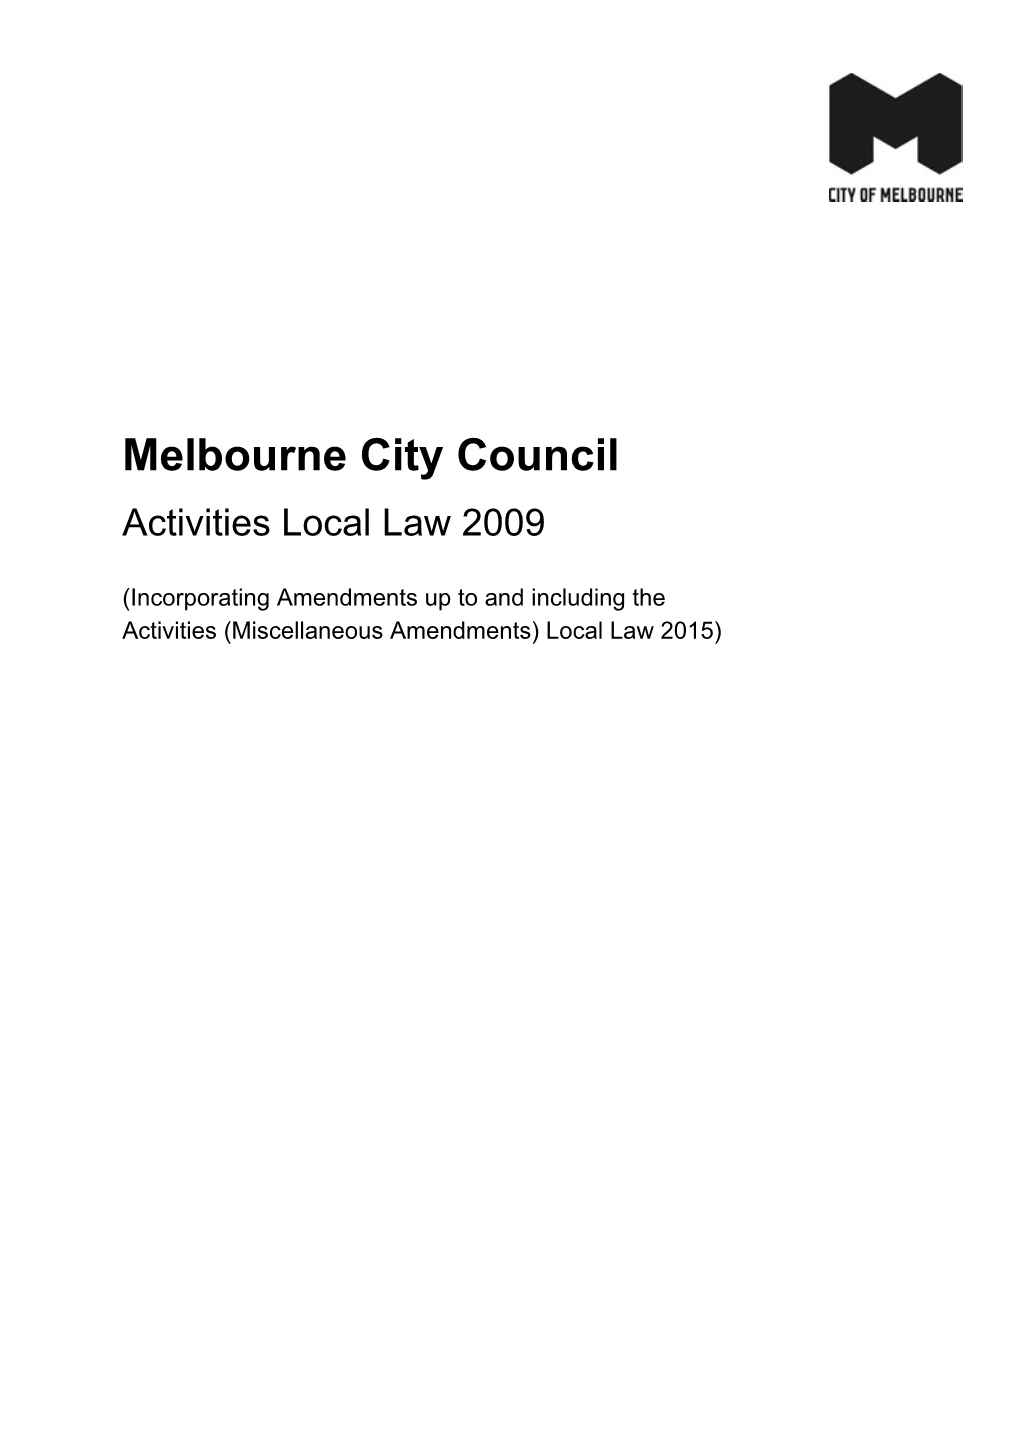 Activities Local Law 2009